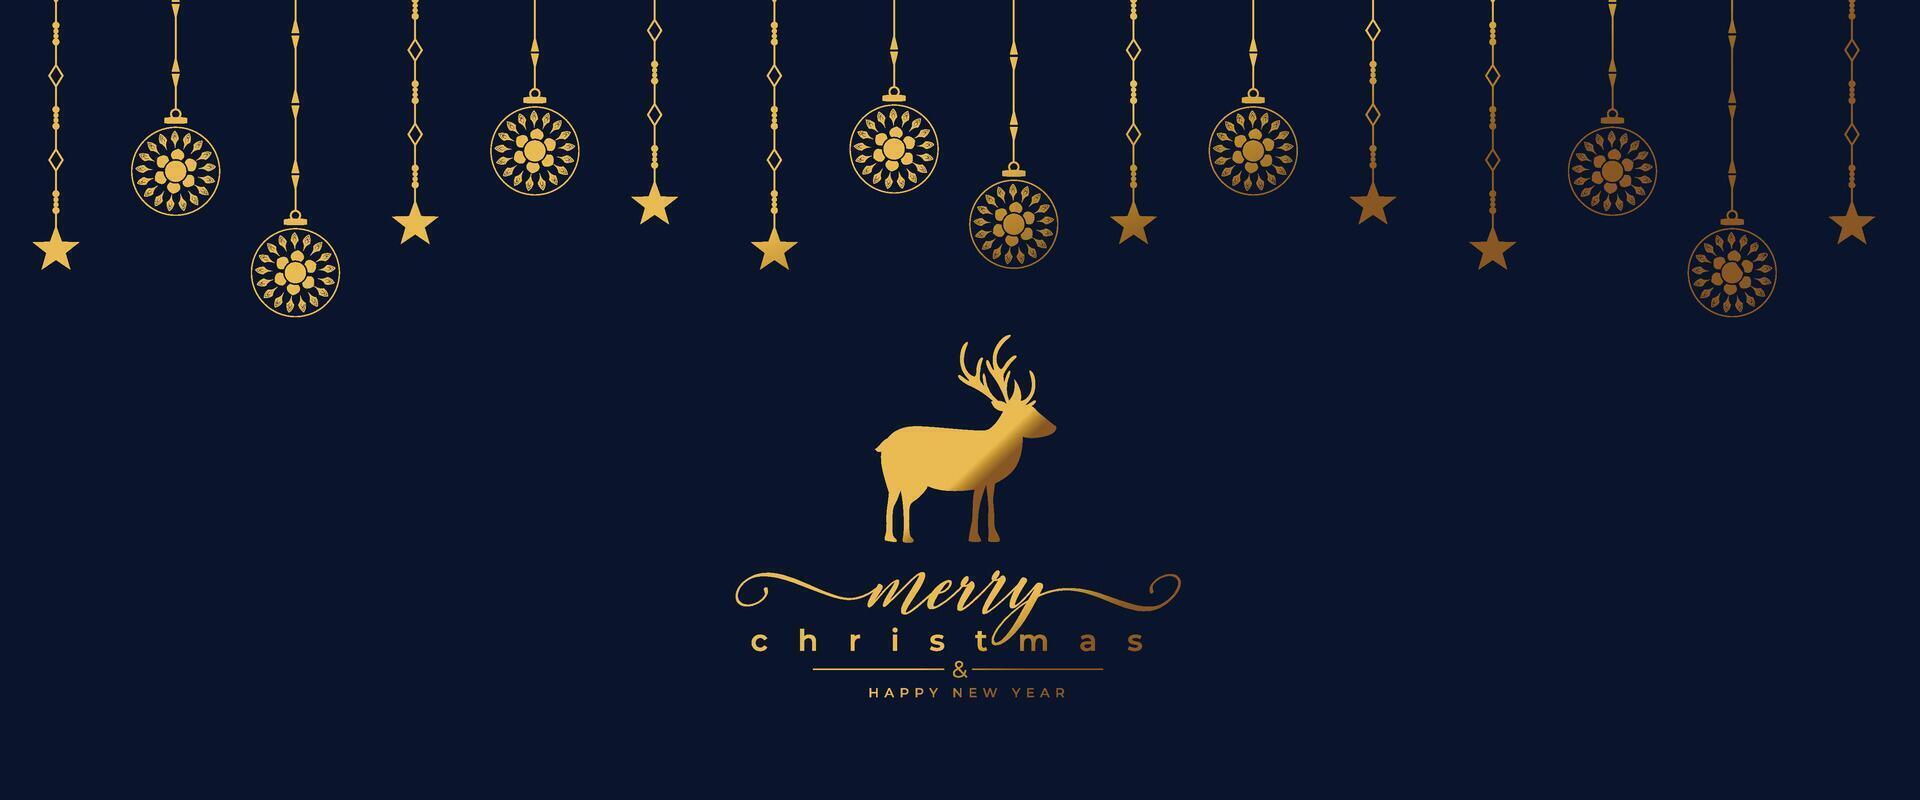 merry christmas festive invitation wallpaper with golden xmas deer vector